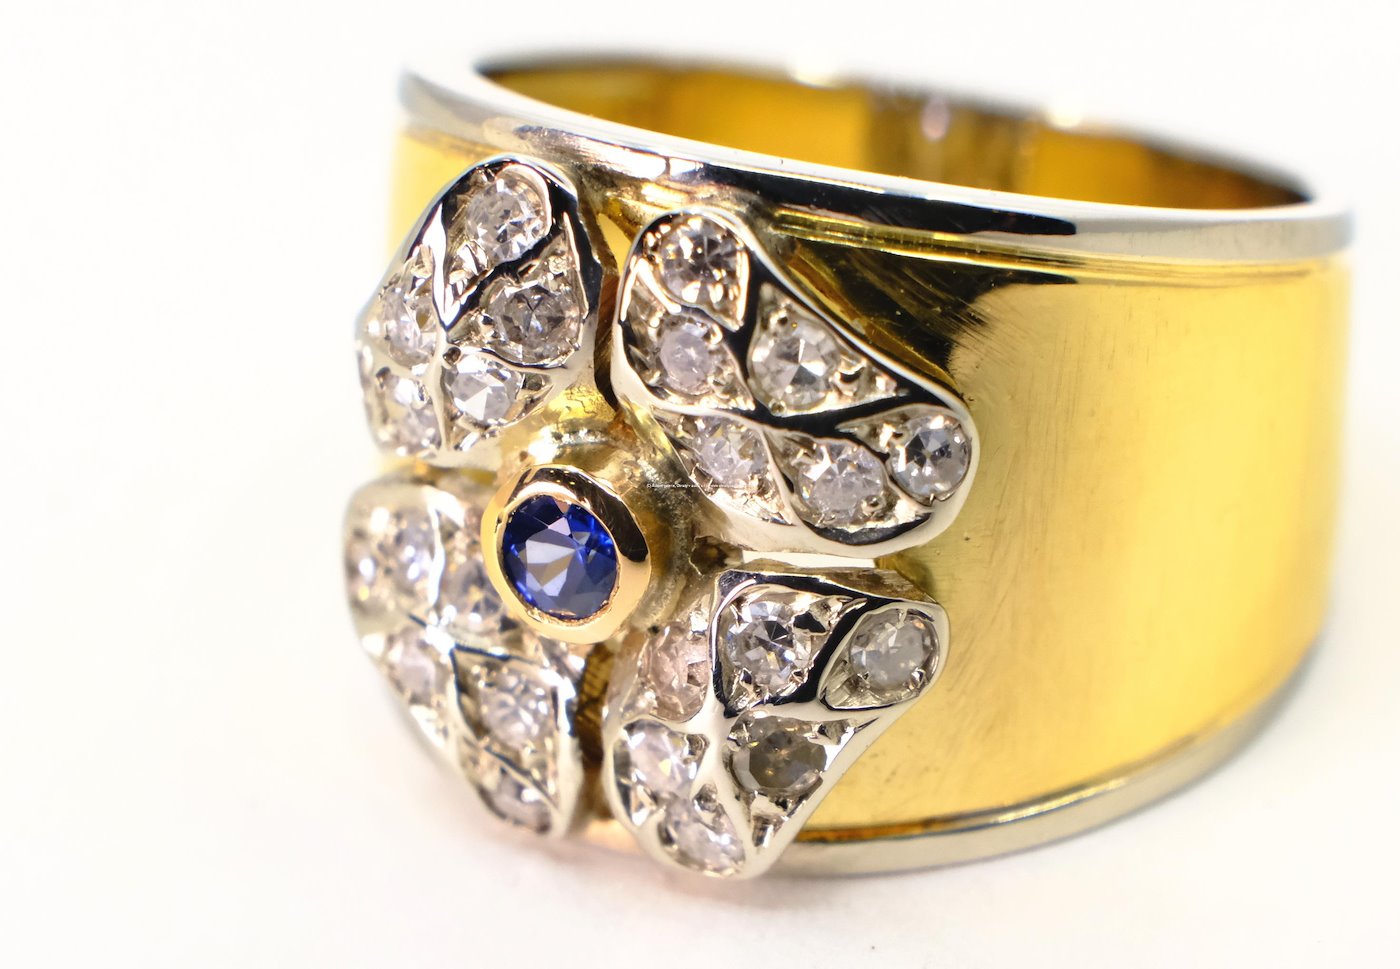 .. - Briliantový prsten, zlato 750/1000, hrubá hmotnost 10,21 g